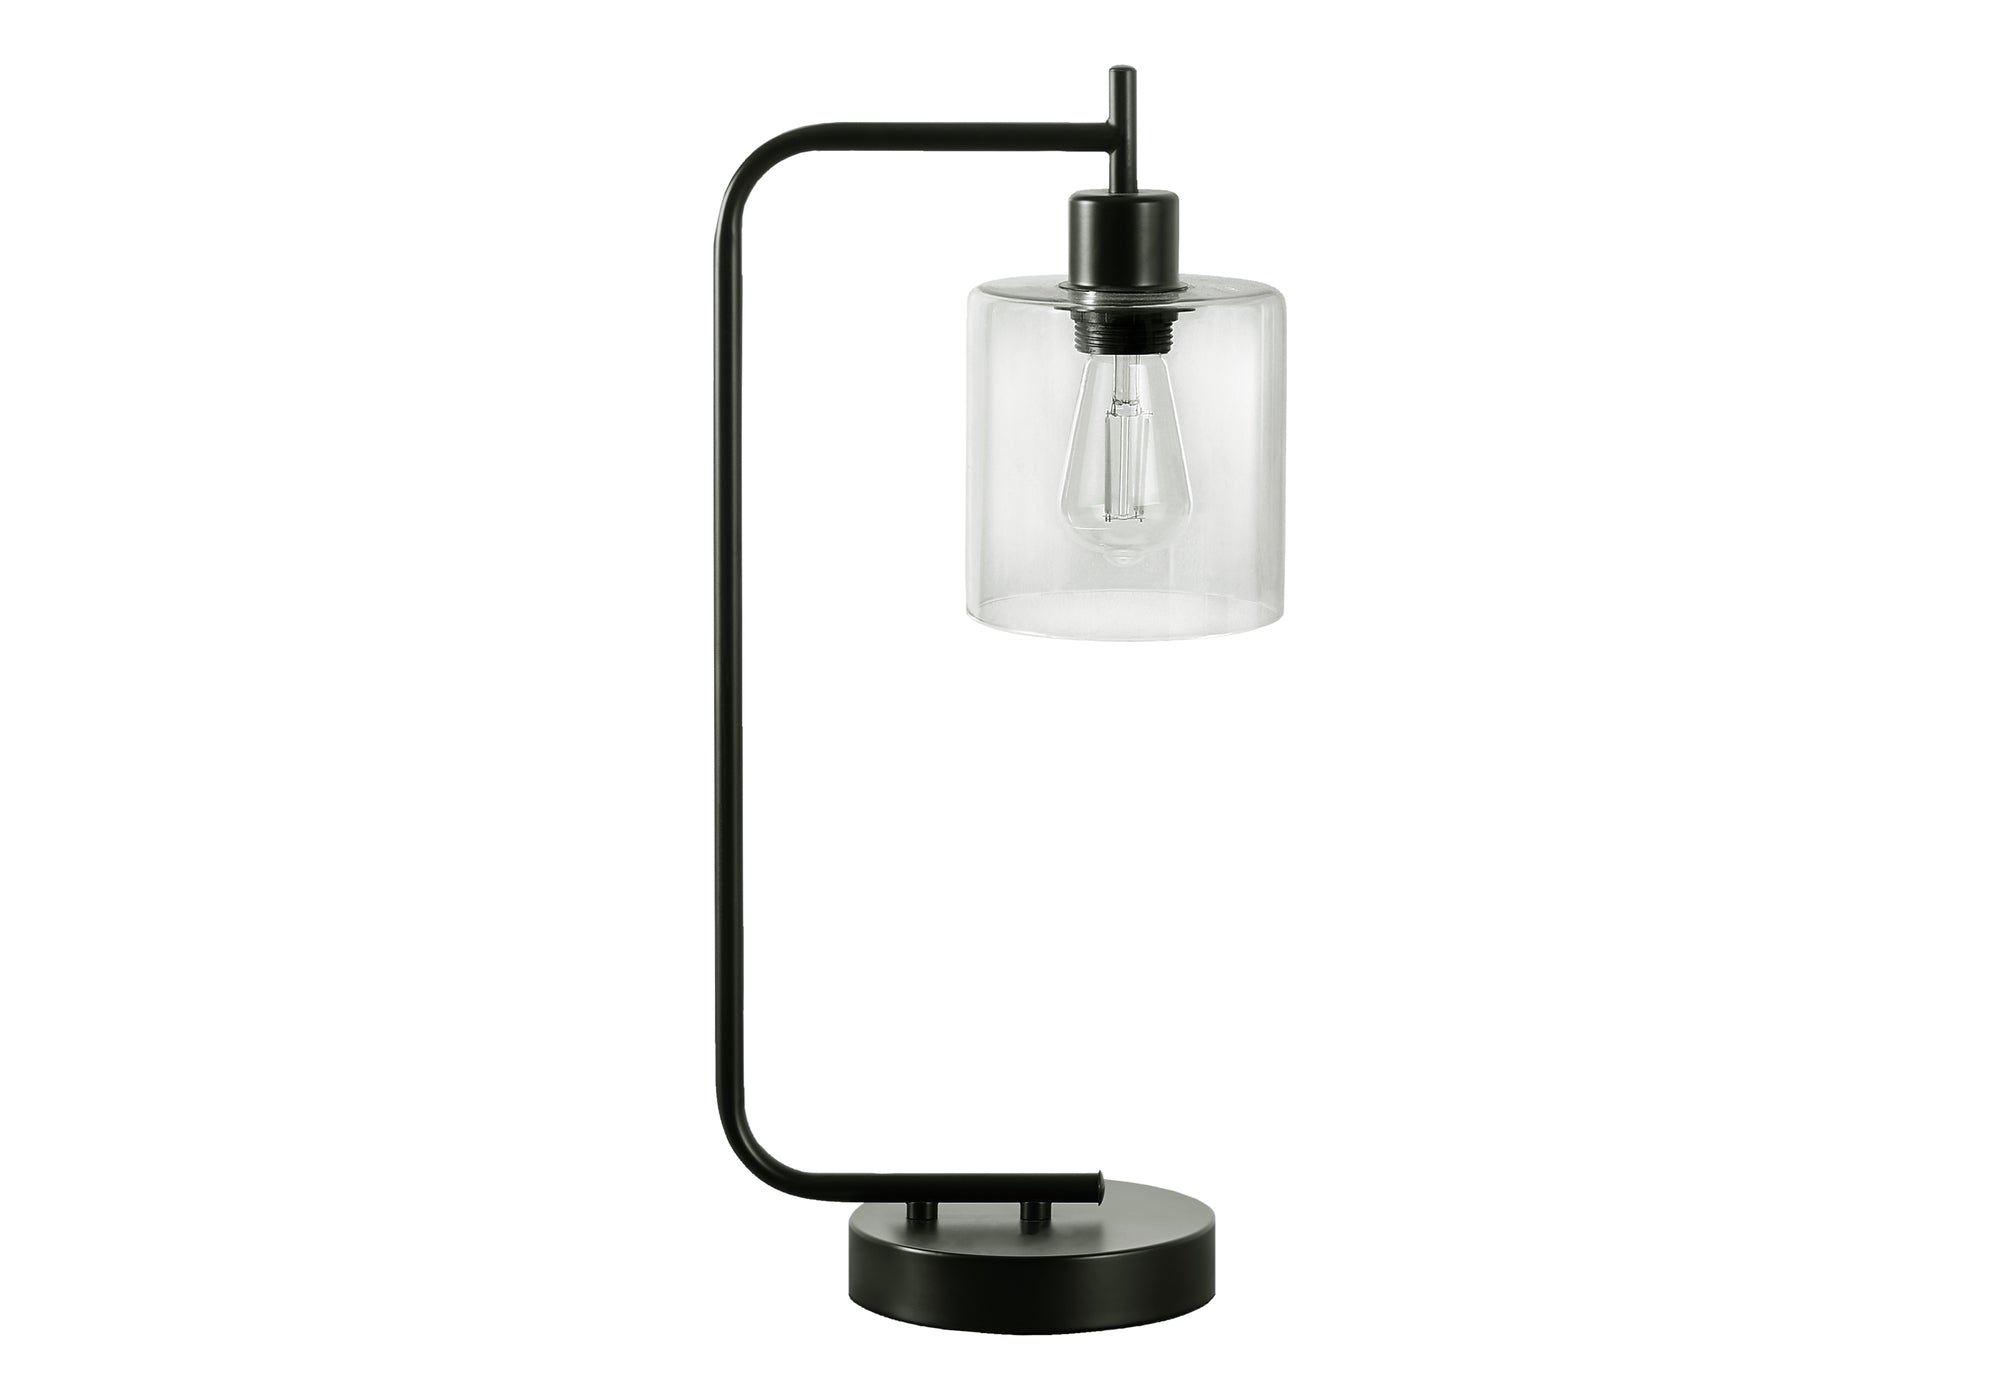 MN-189637    Lighting, 20"H, Table Lamp, Usb Port Included, Black Metal, Glass Shade, Modern